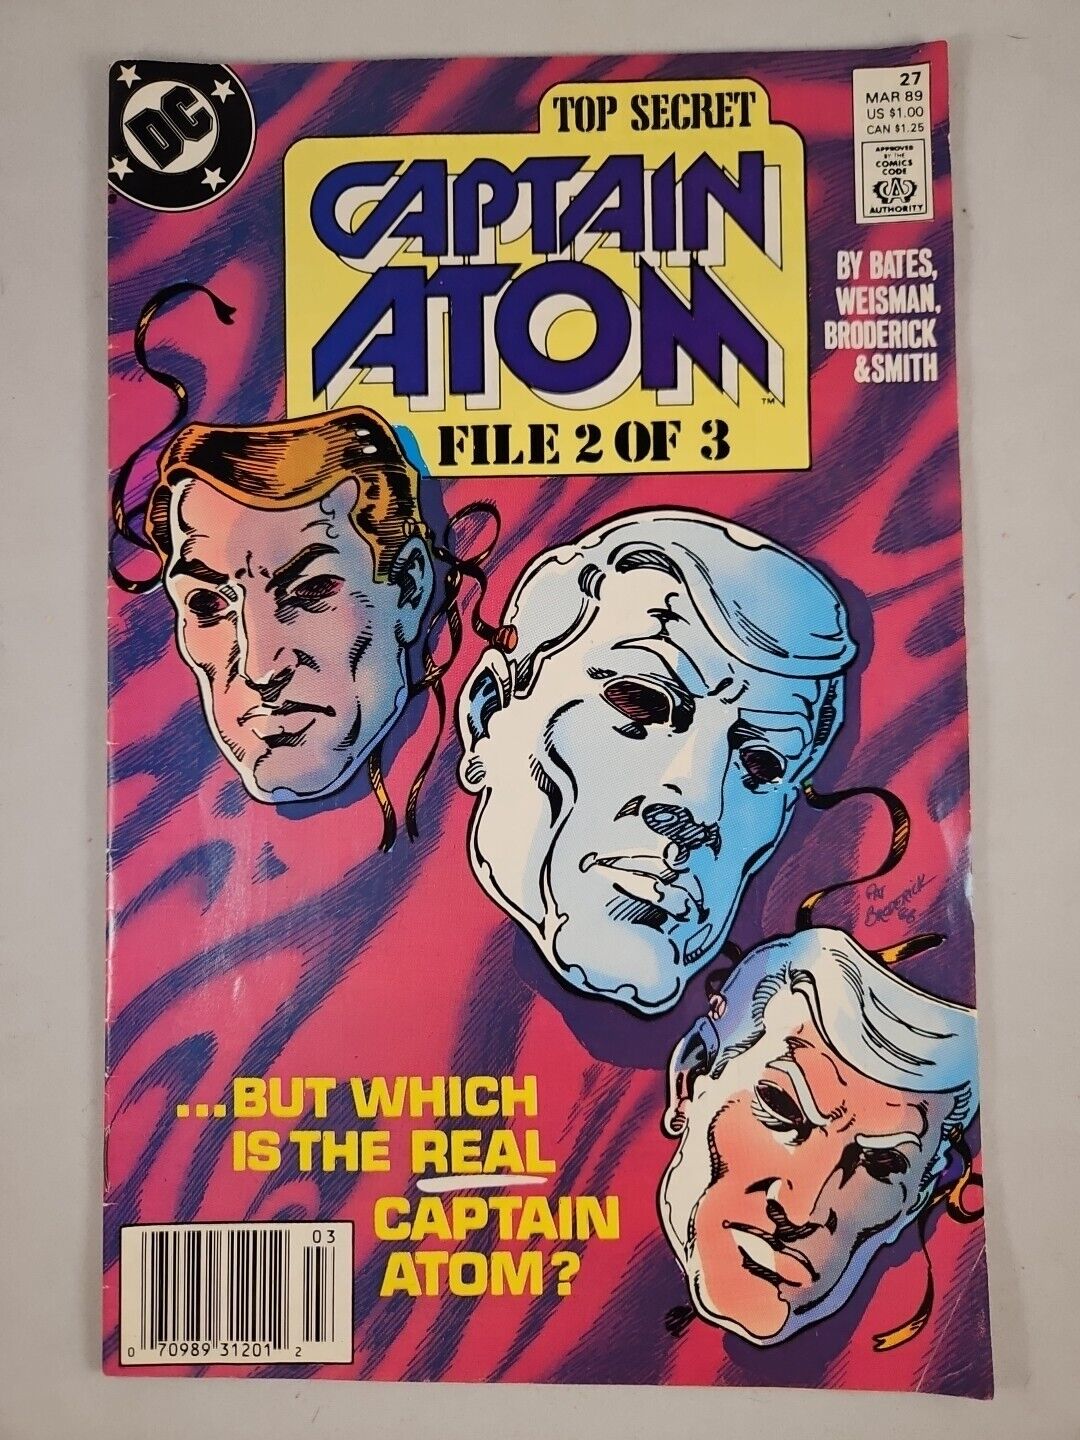 Captain Atom, Top Secret File 2 of 3 (March 1989) Issue 27, DC Comics